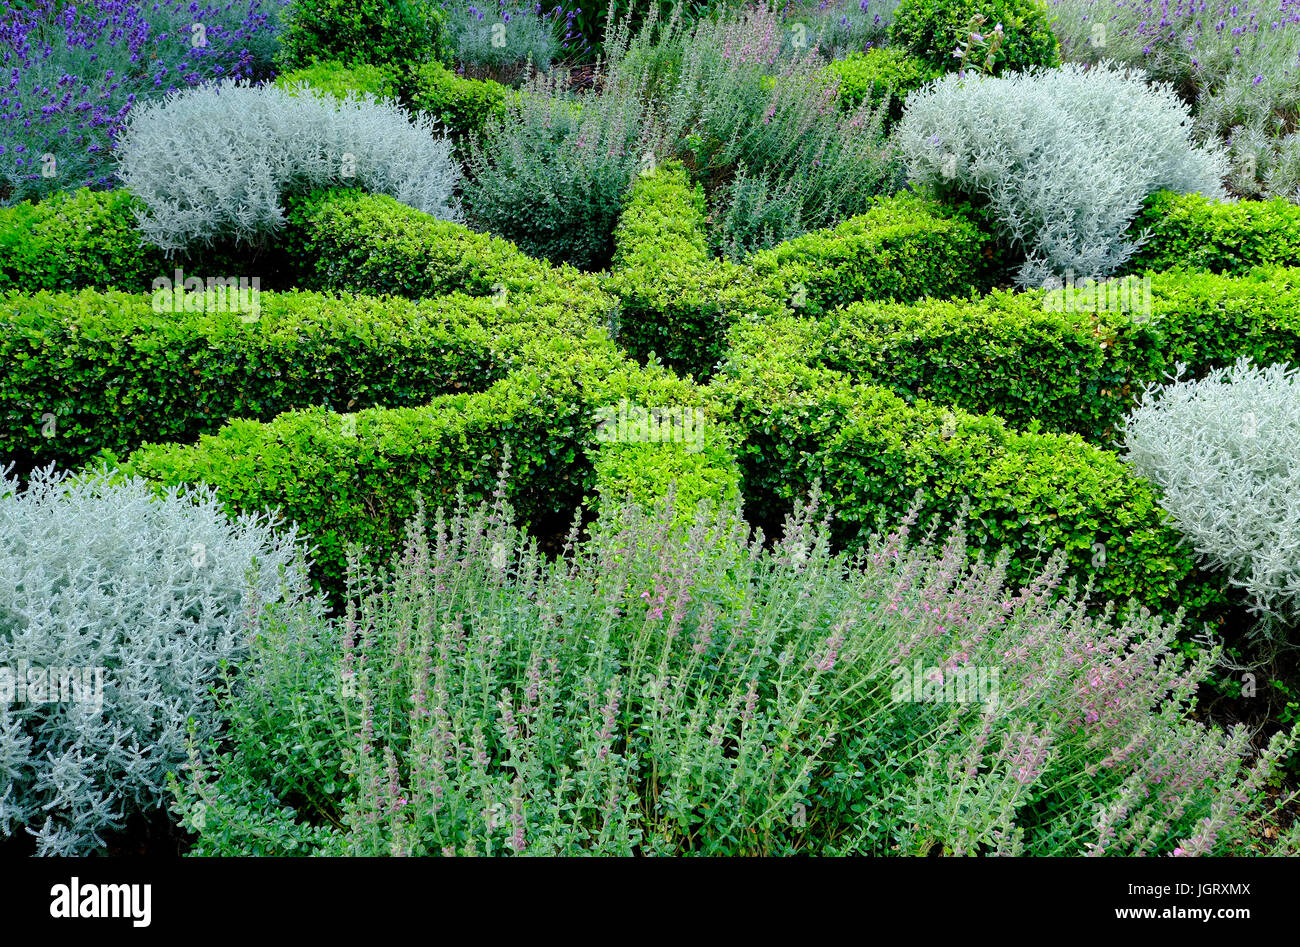 norwich cathedral herb garden, norfolk, england Stock Photo